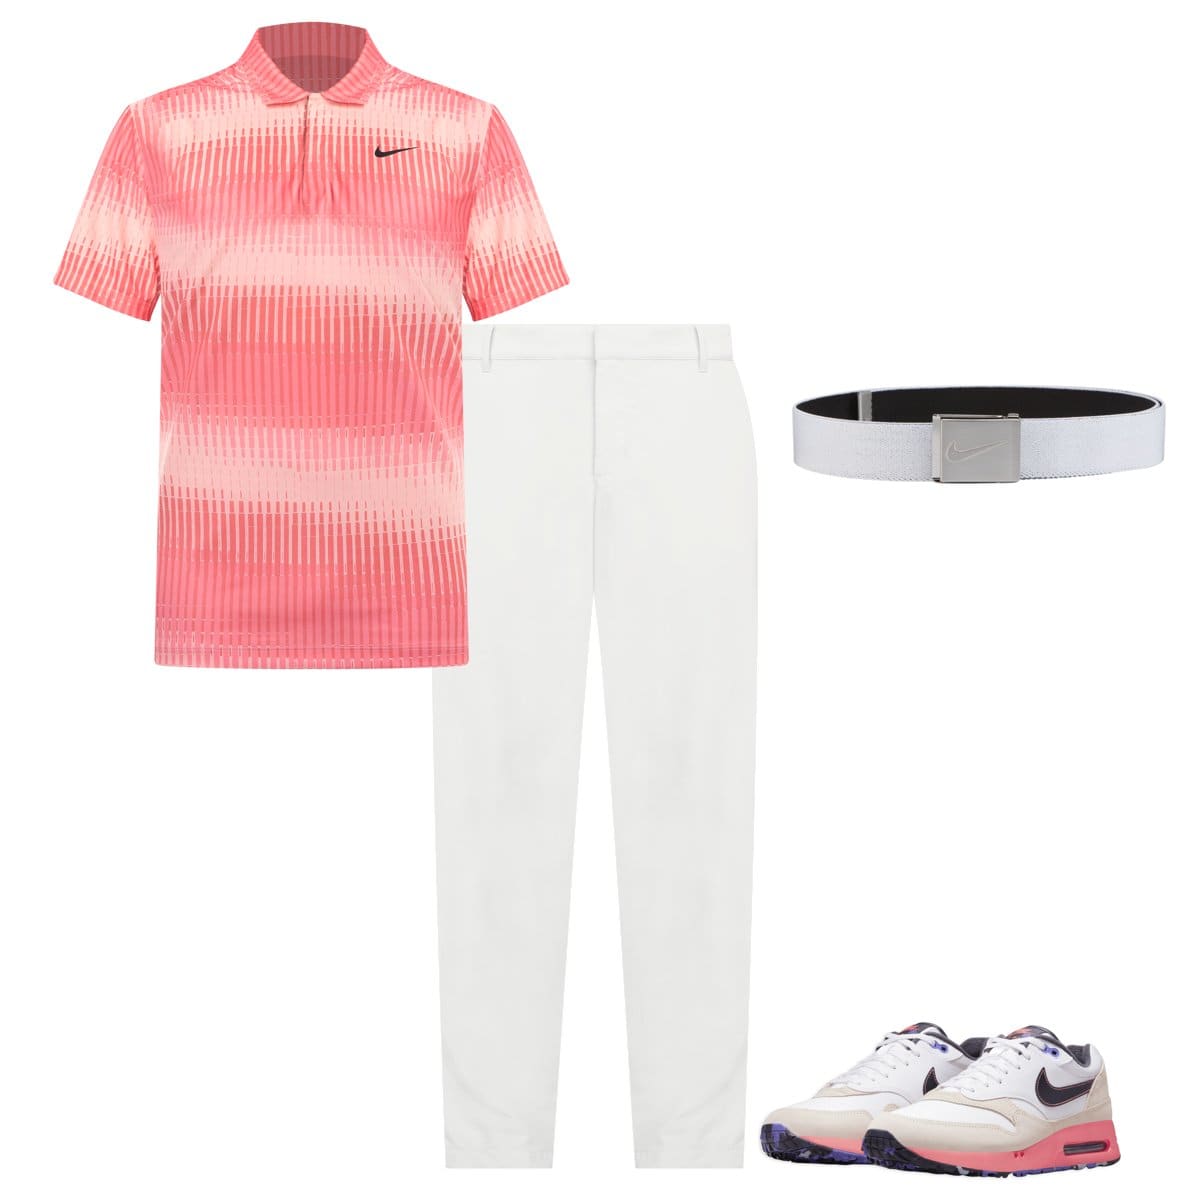 golf attire for men